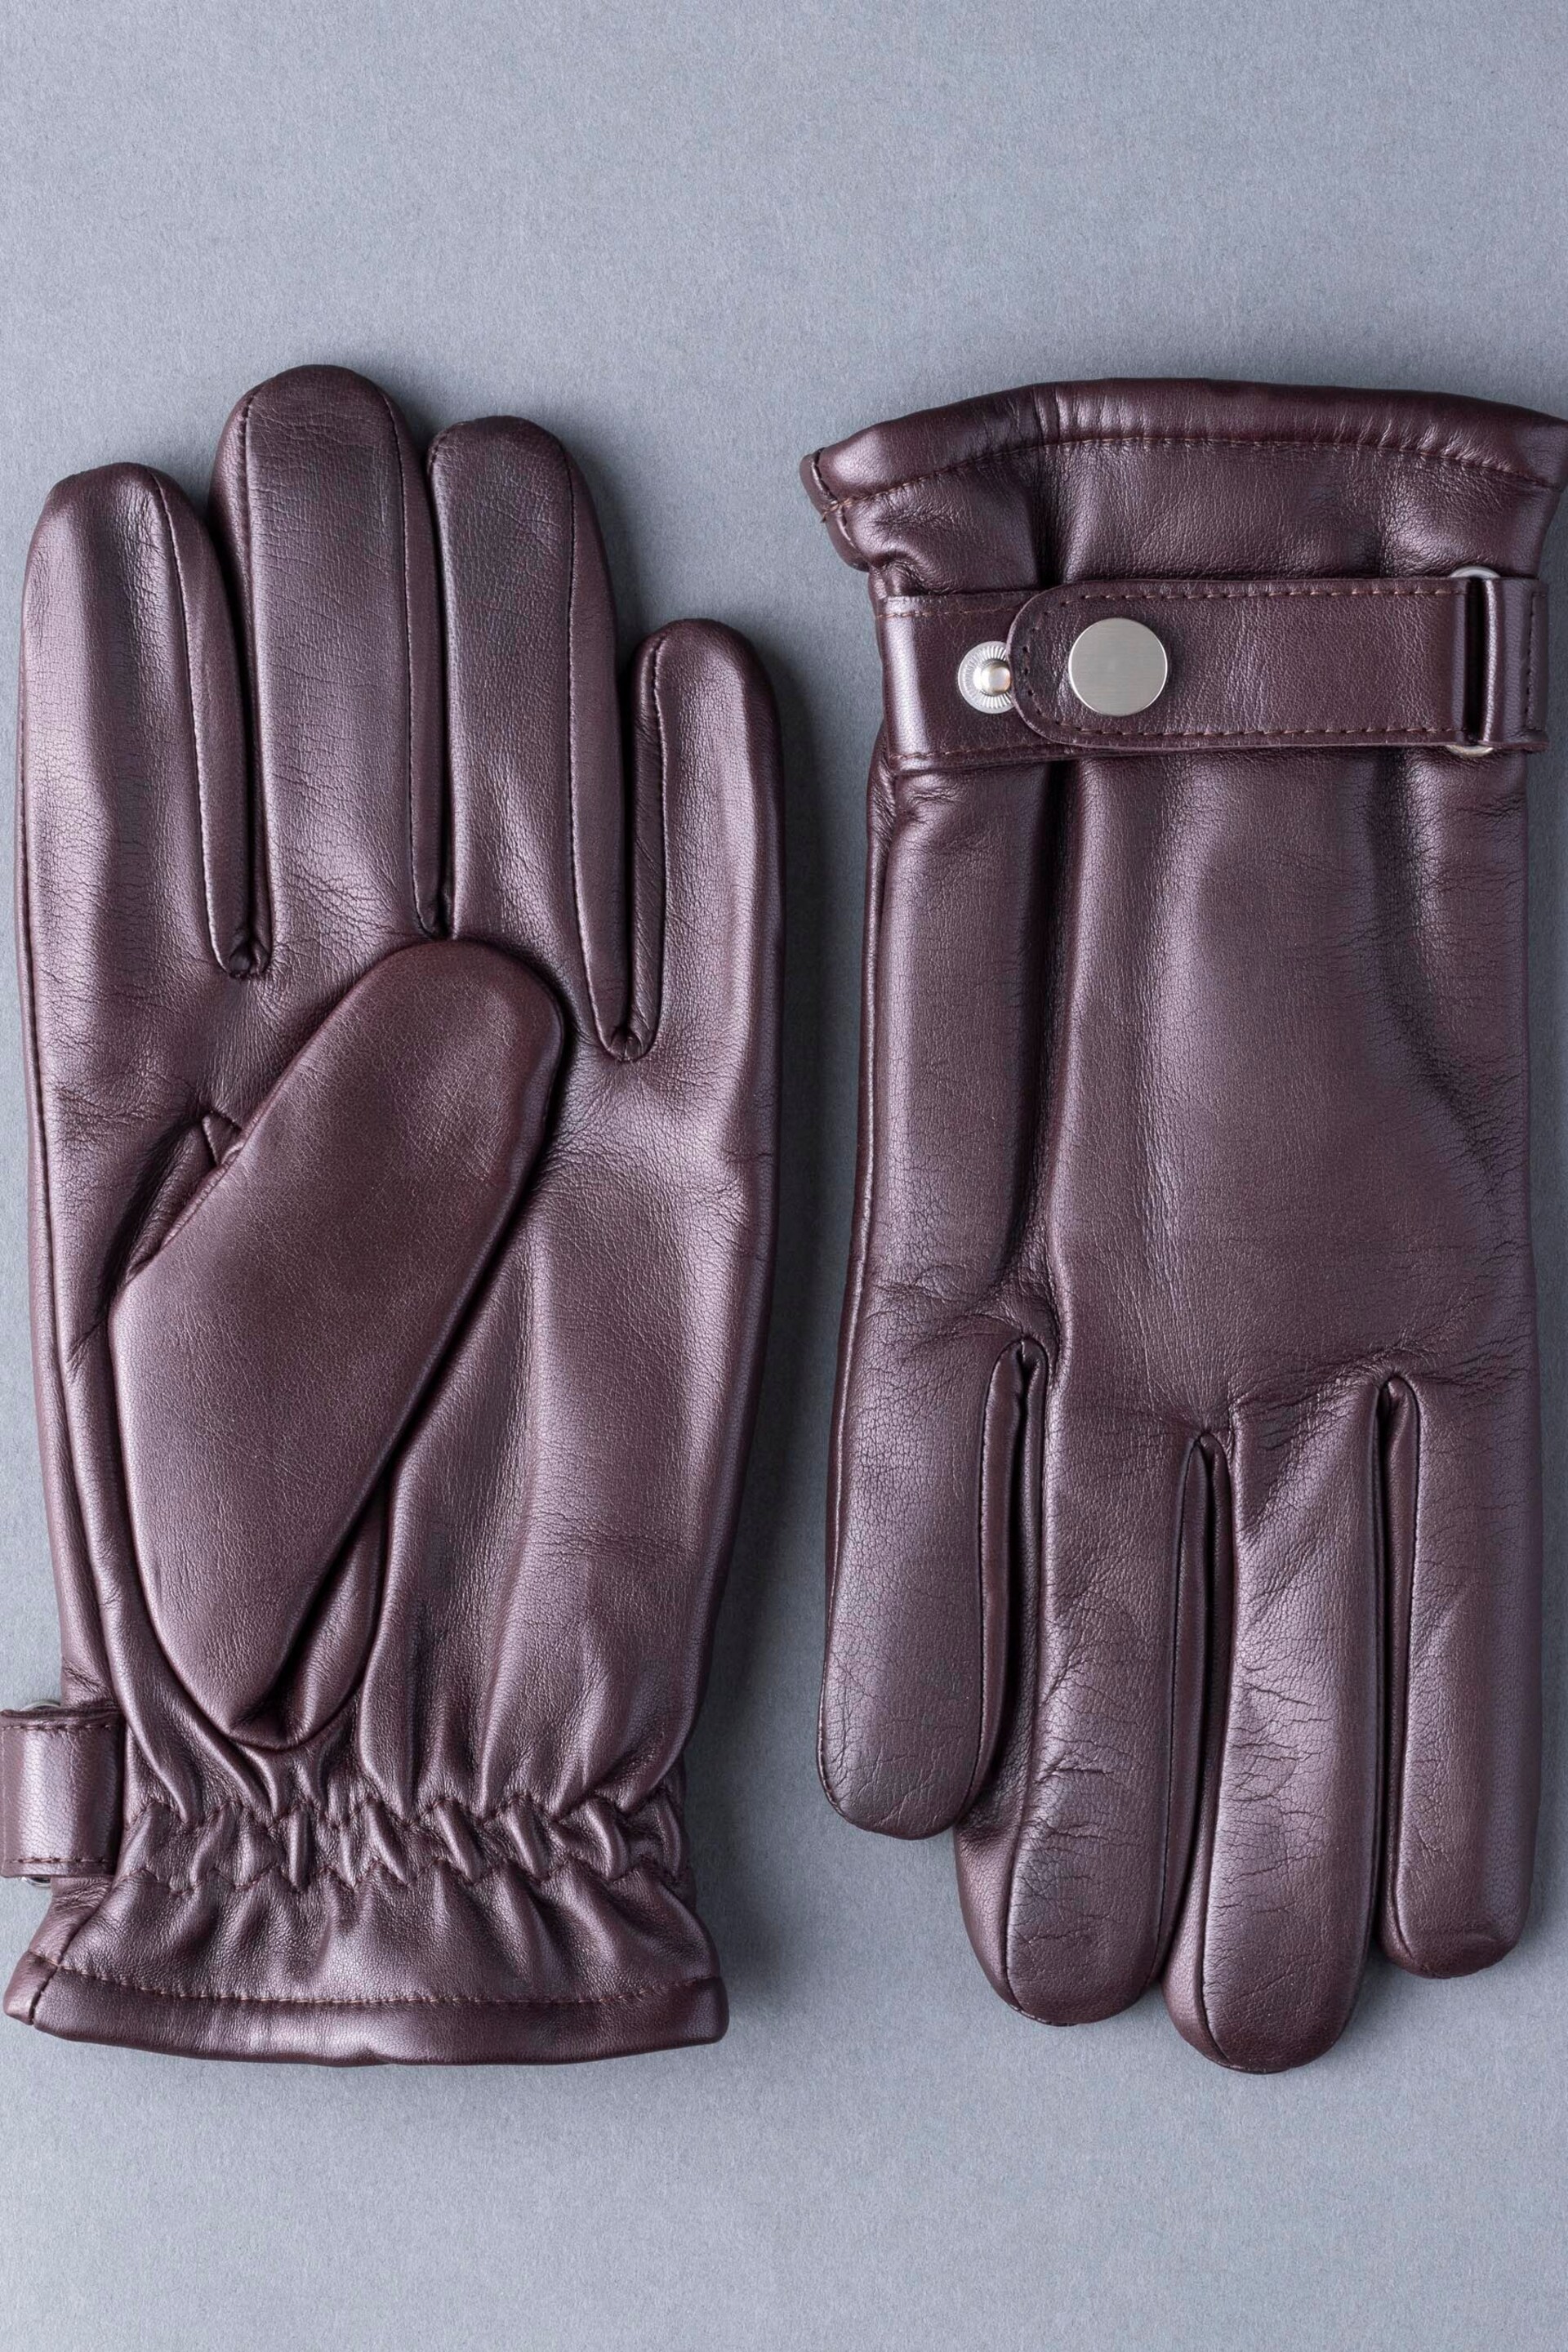 Lakeland Leather Cognac Martin Leather Gloves - Image 1 of 4